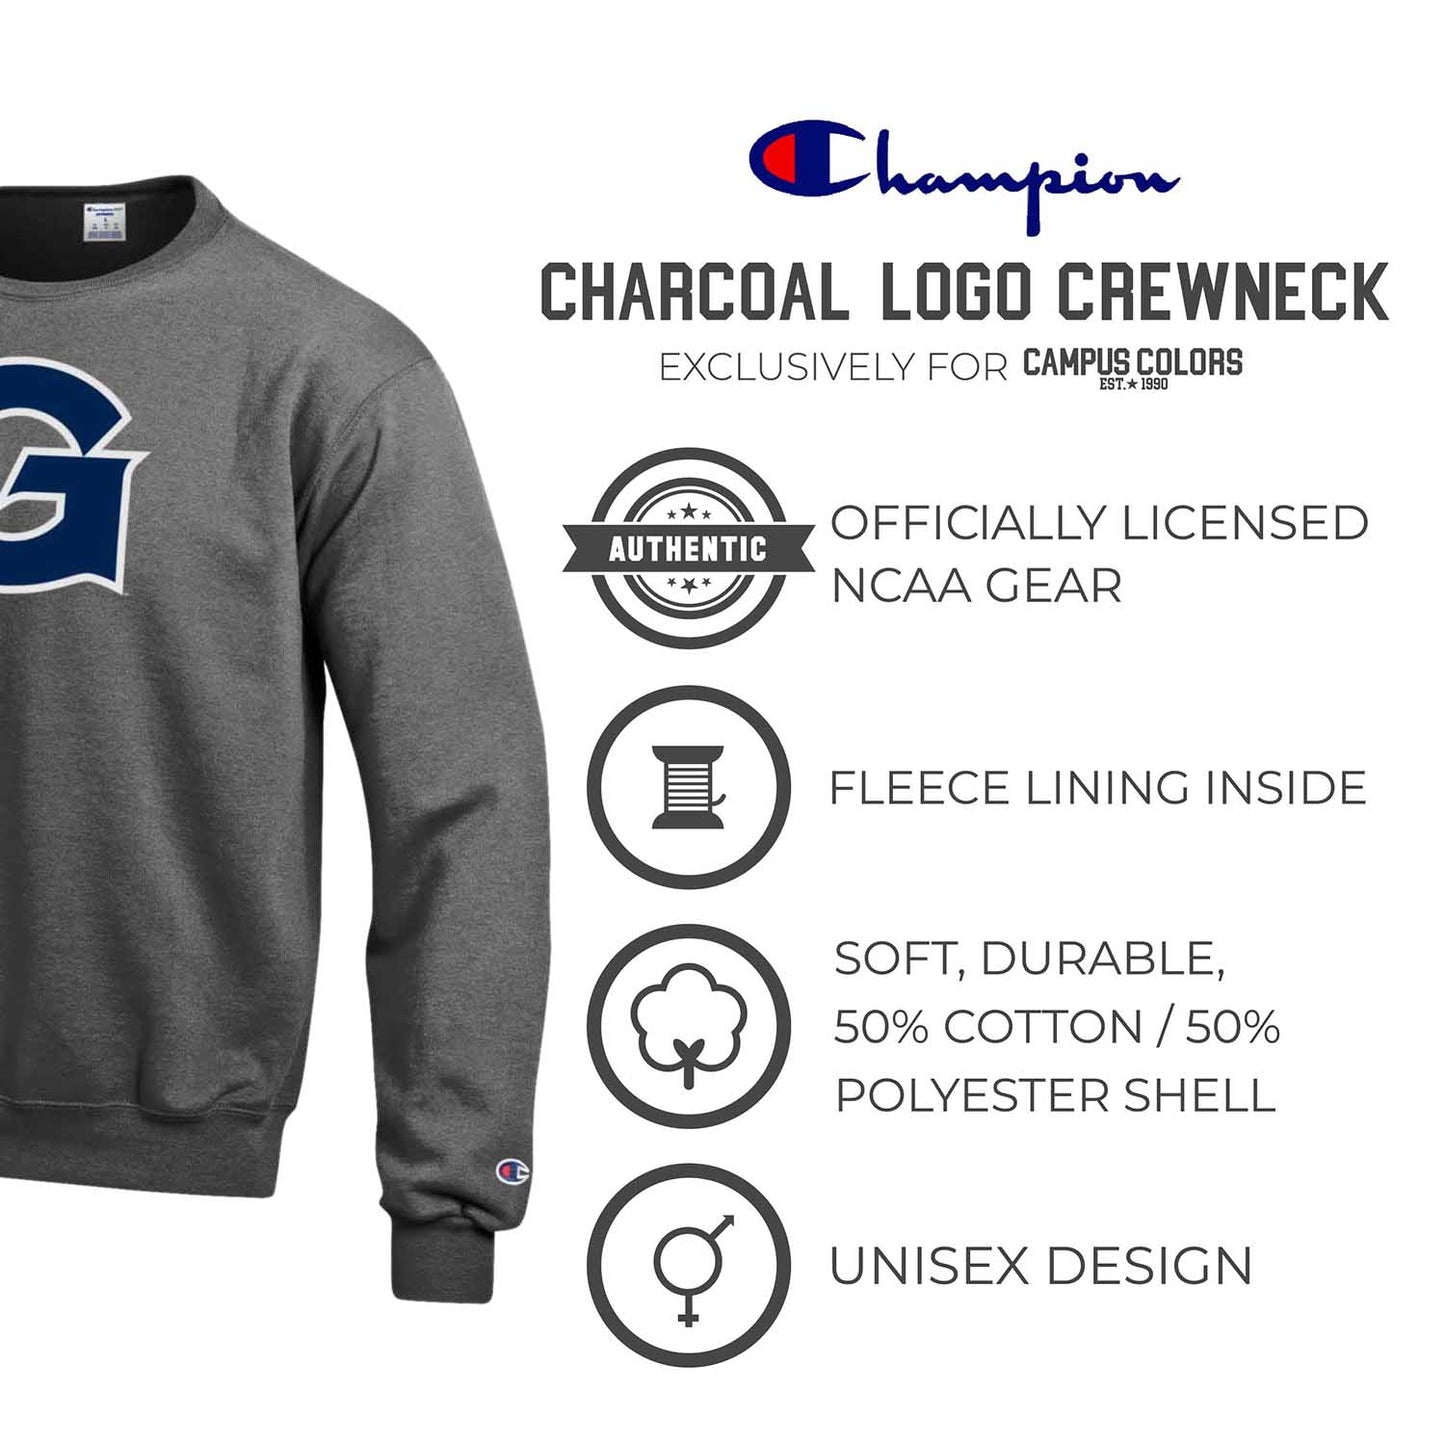 Georgetown Hoyas Adult Mascot Fleece Crewneck - Charcoal